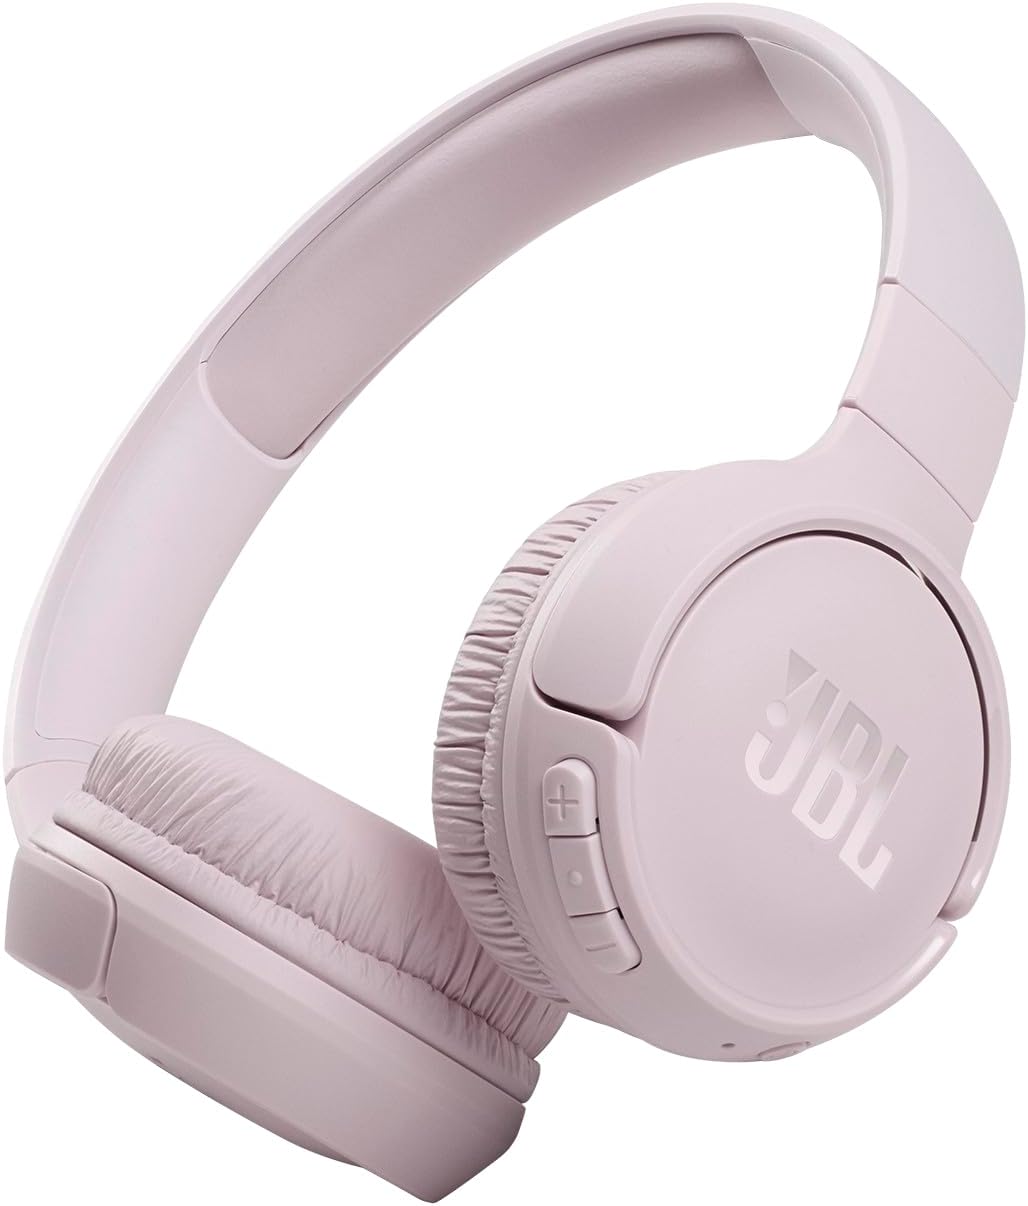 JBL Tune 510BT: Wireless On-Ear Headphones with Purebass Sound